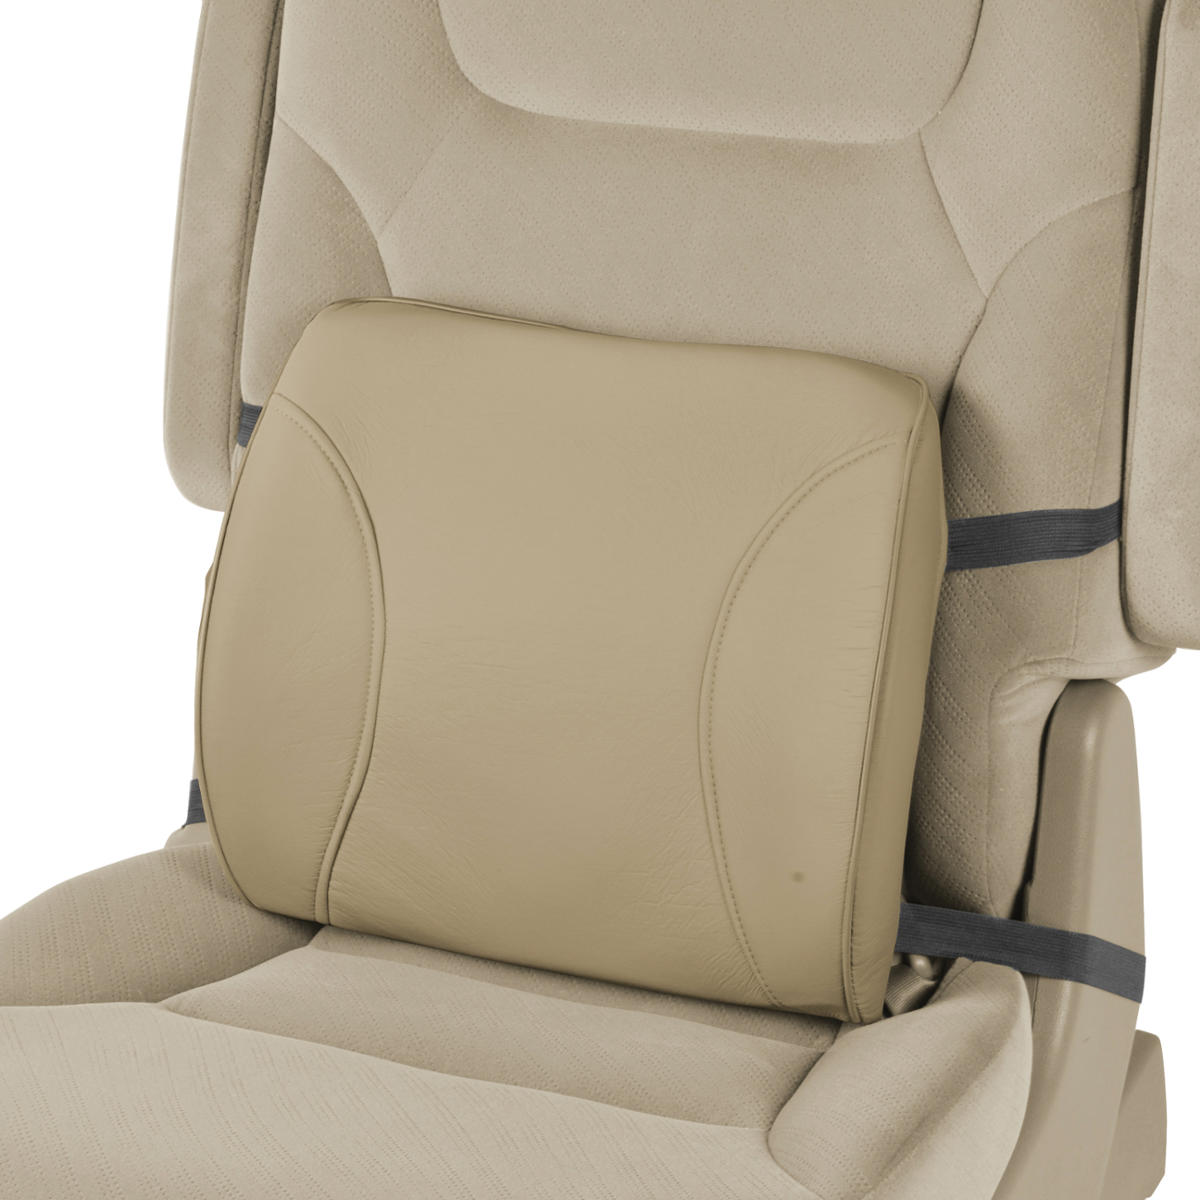 BDK BS-300-BK Durable Foam Lumbar Support 3D Balanced Firmness Cushion-Lower Back Pain Relief-Best for Office Chair, Car Seat, Recliner, Black - Black:#000000